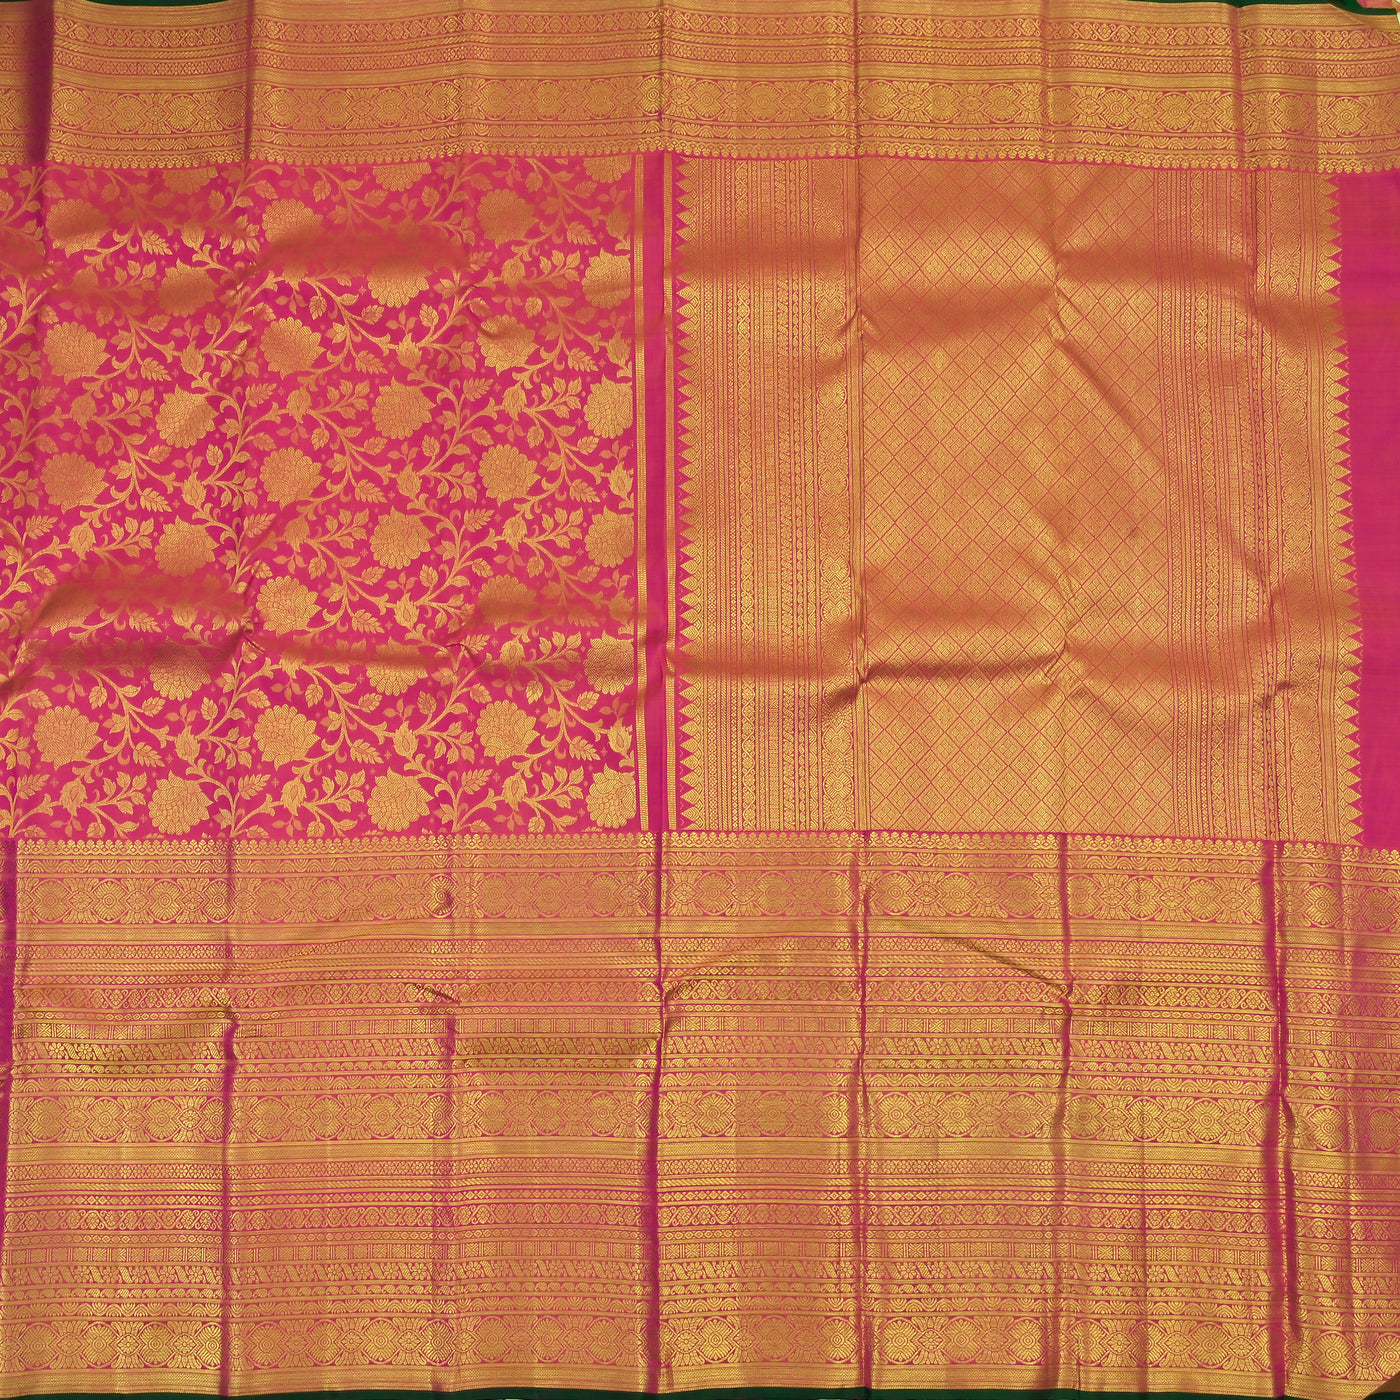 Rani Orange Kanchipuram Silk Saree with Creeper Design